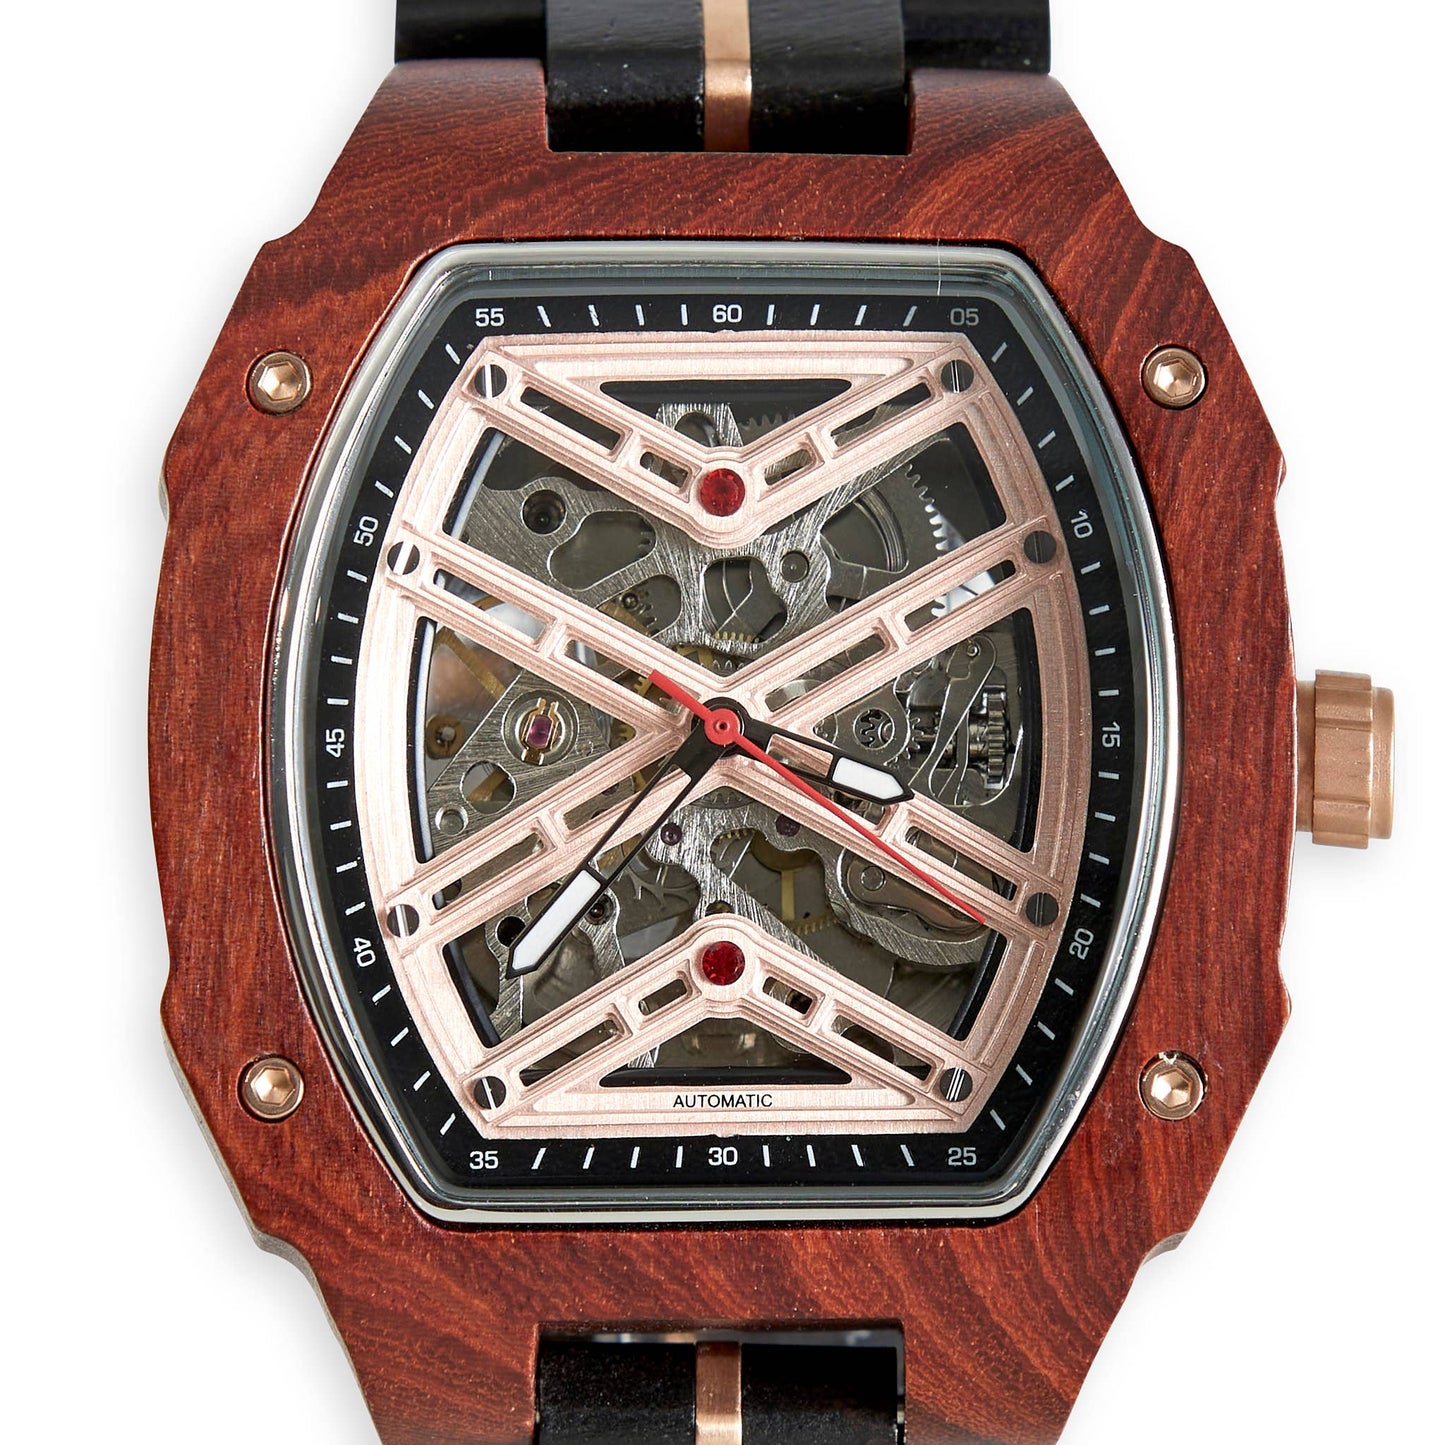 The Mahogany - Handmade Natural Wood Wristwatch